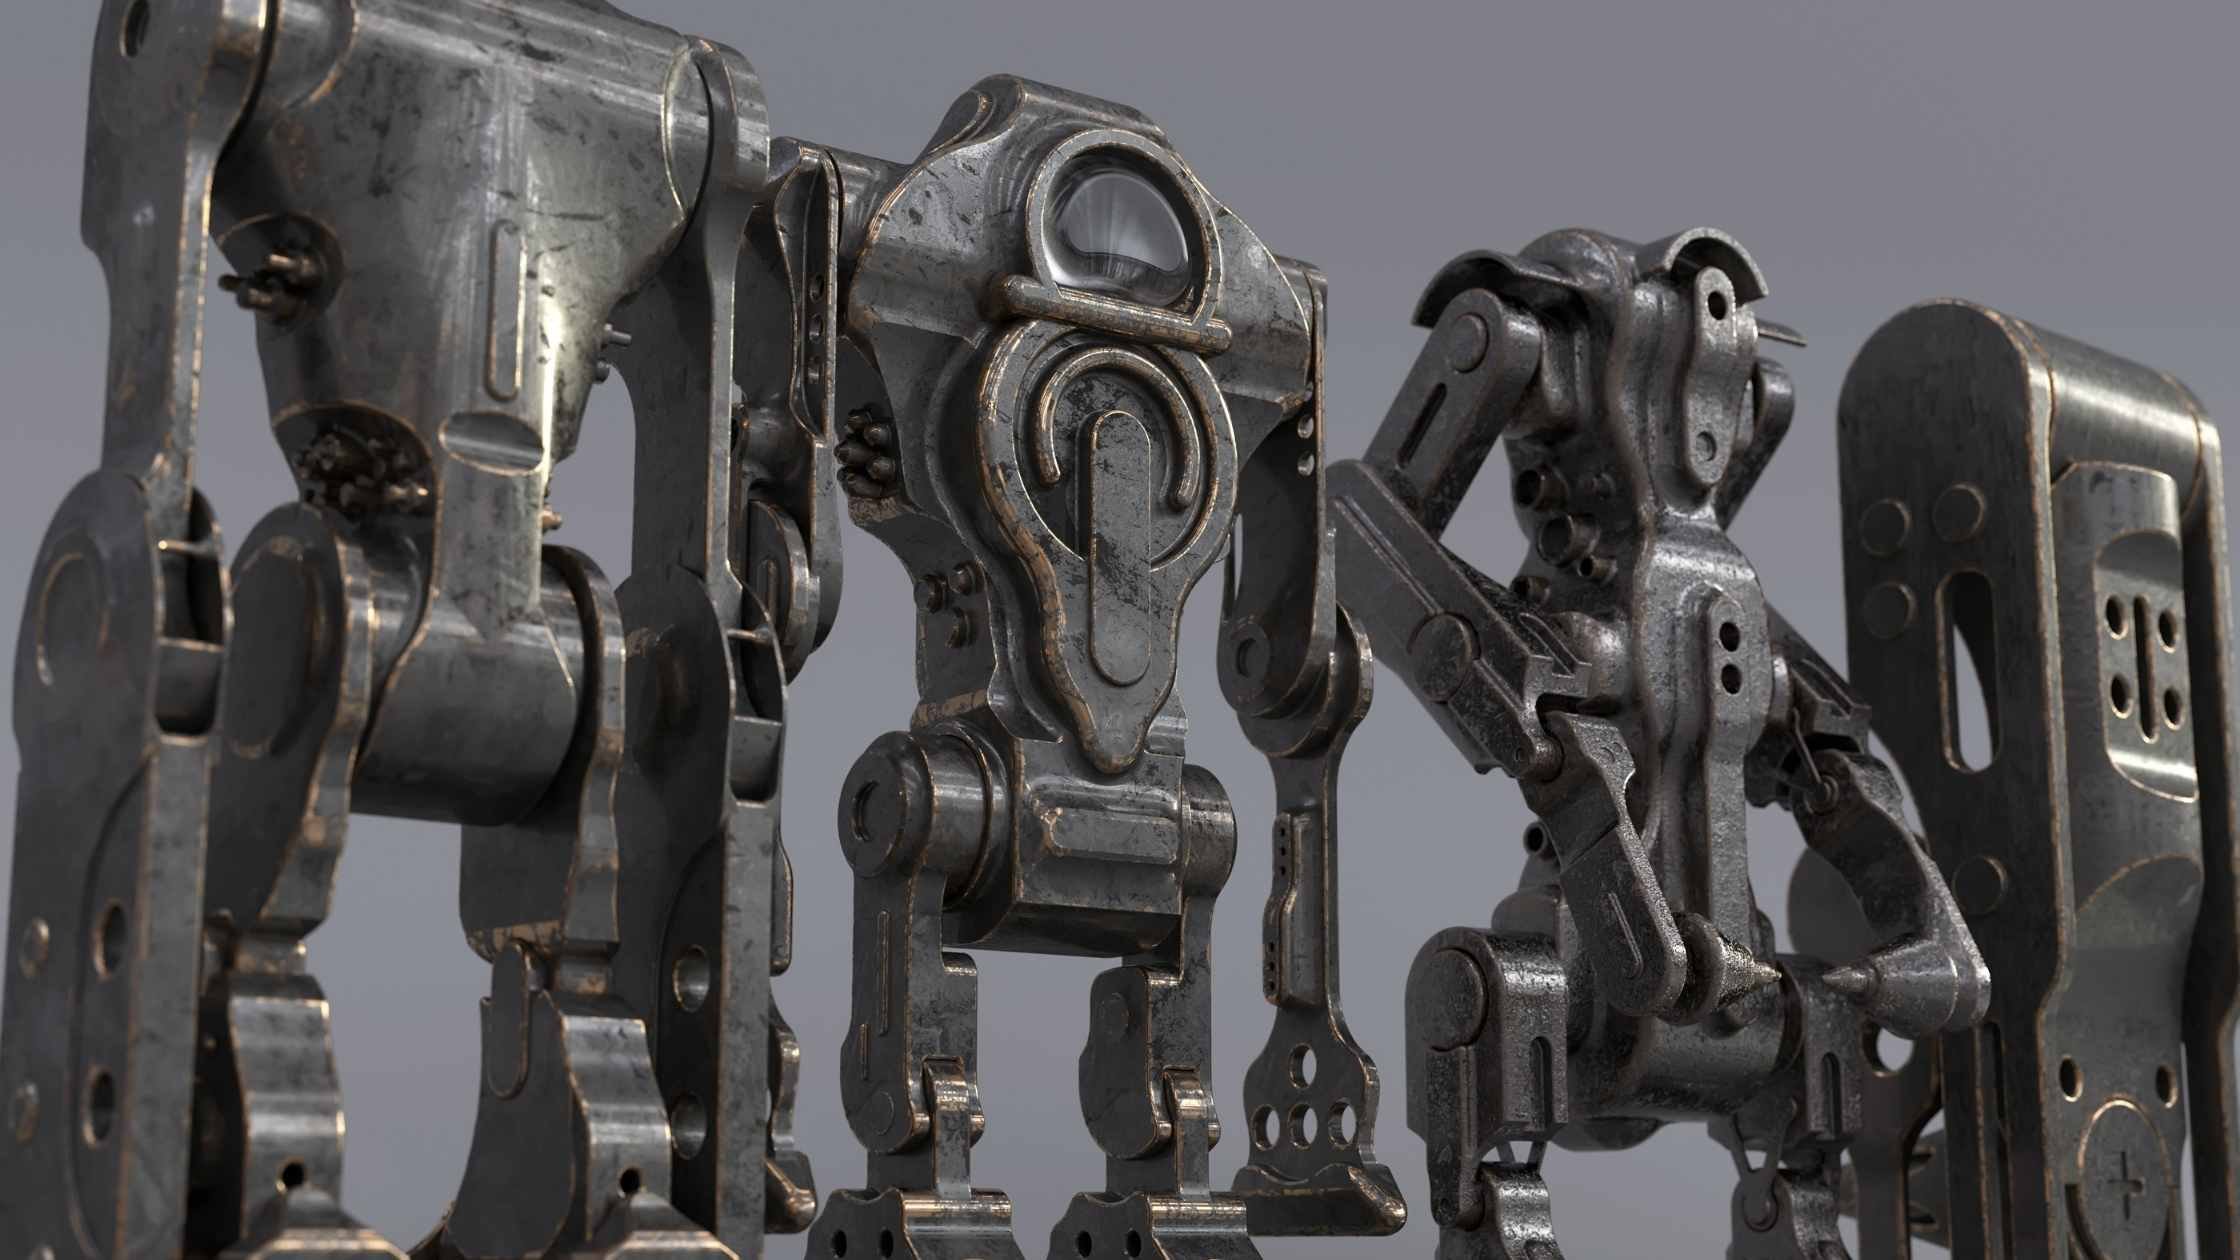 Group of metal robots